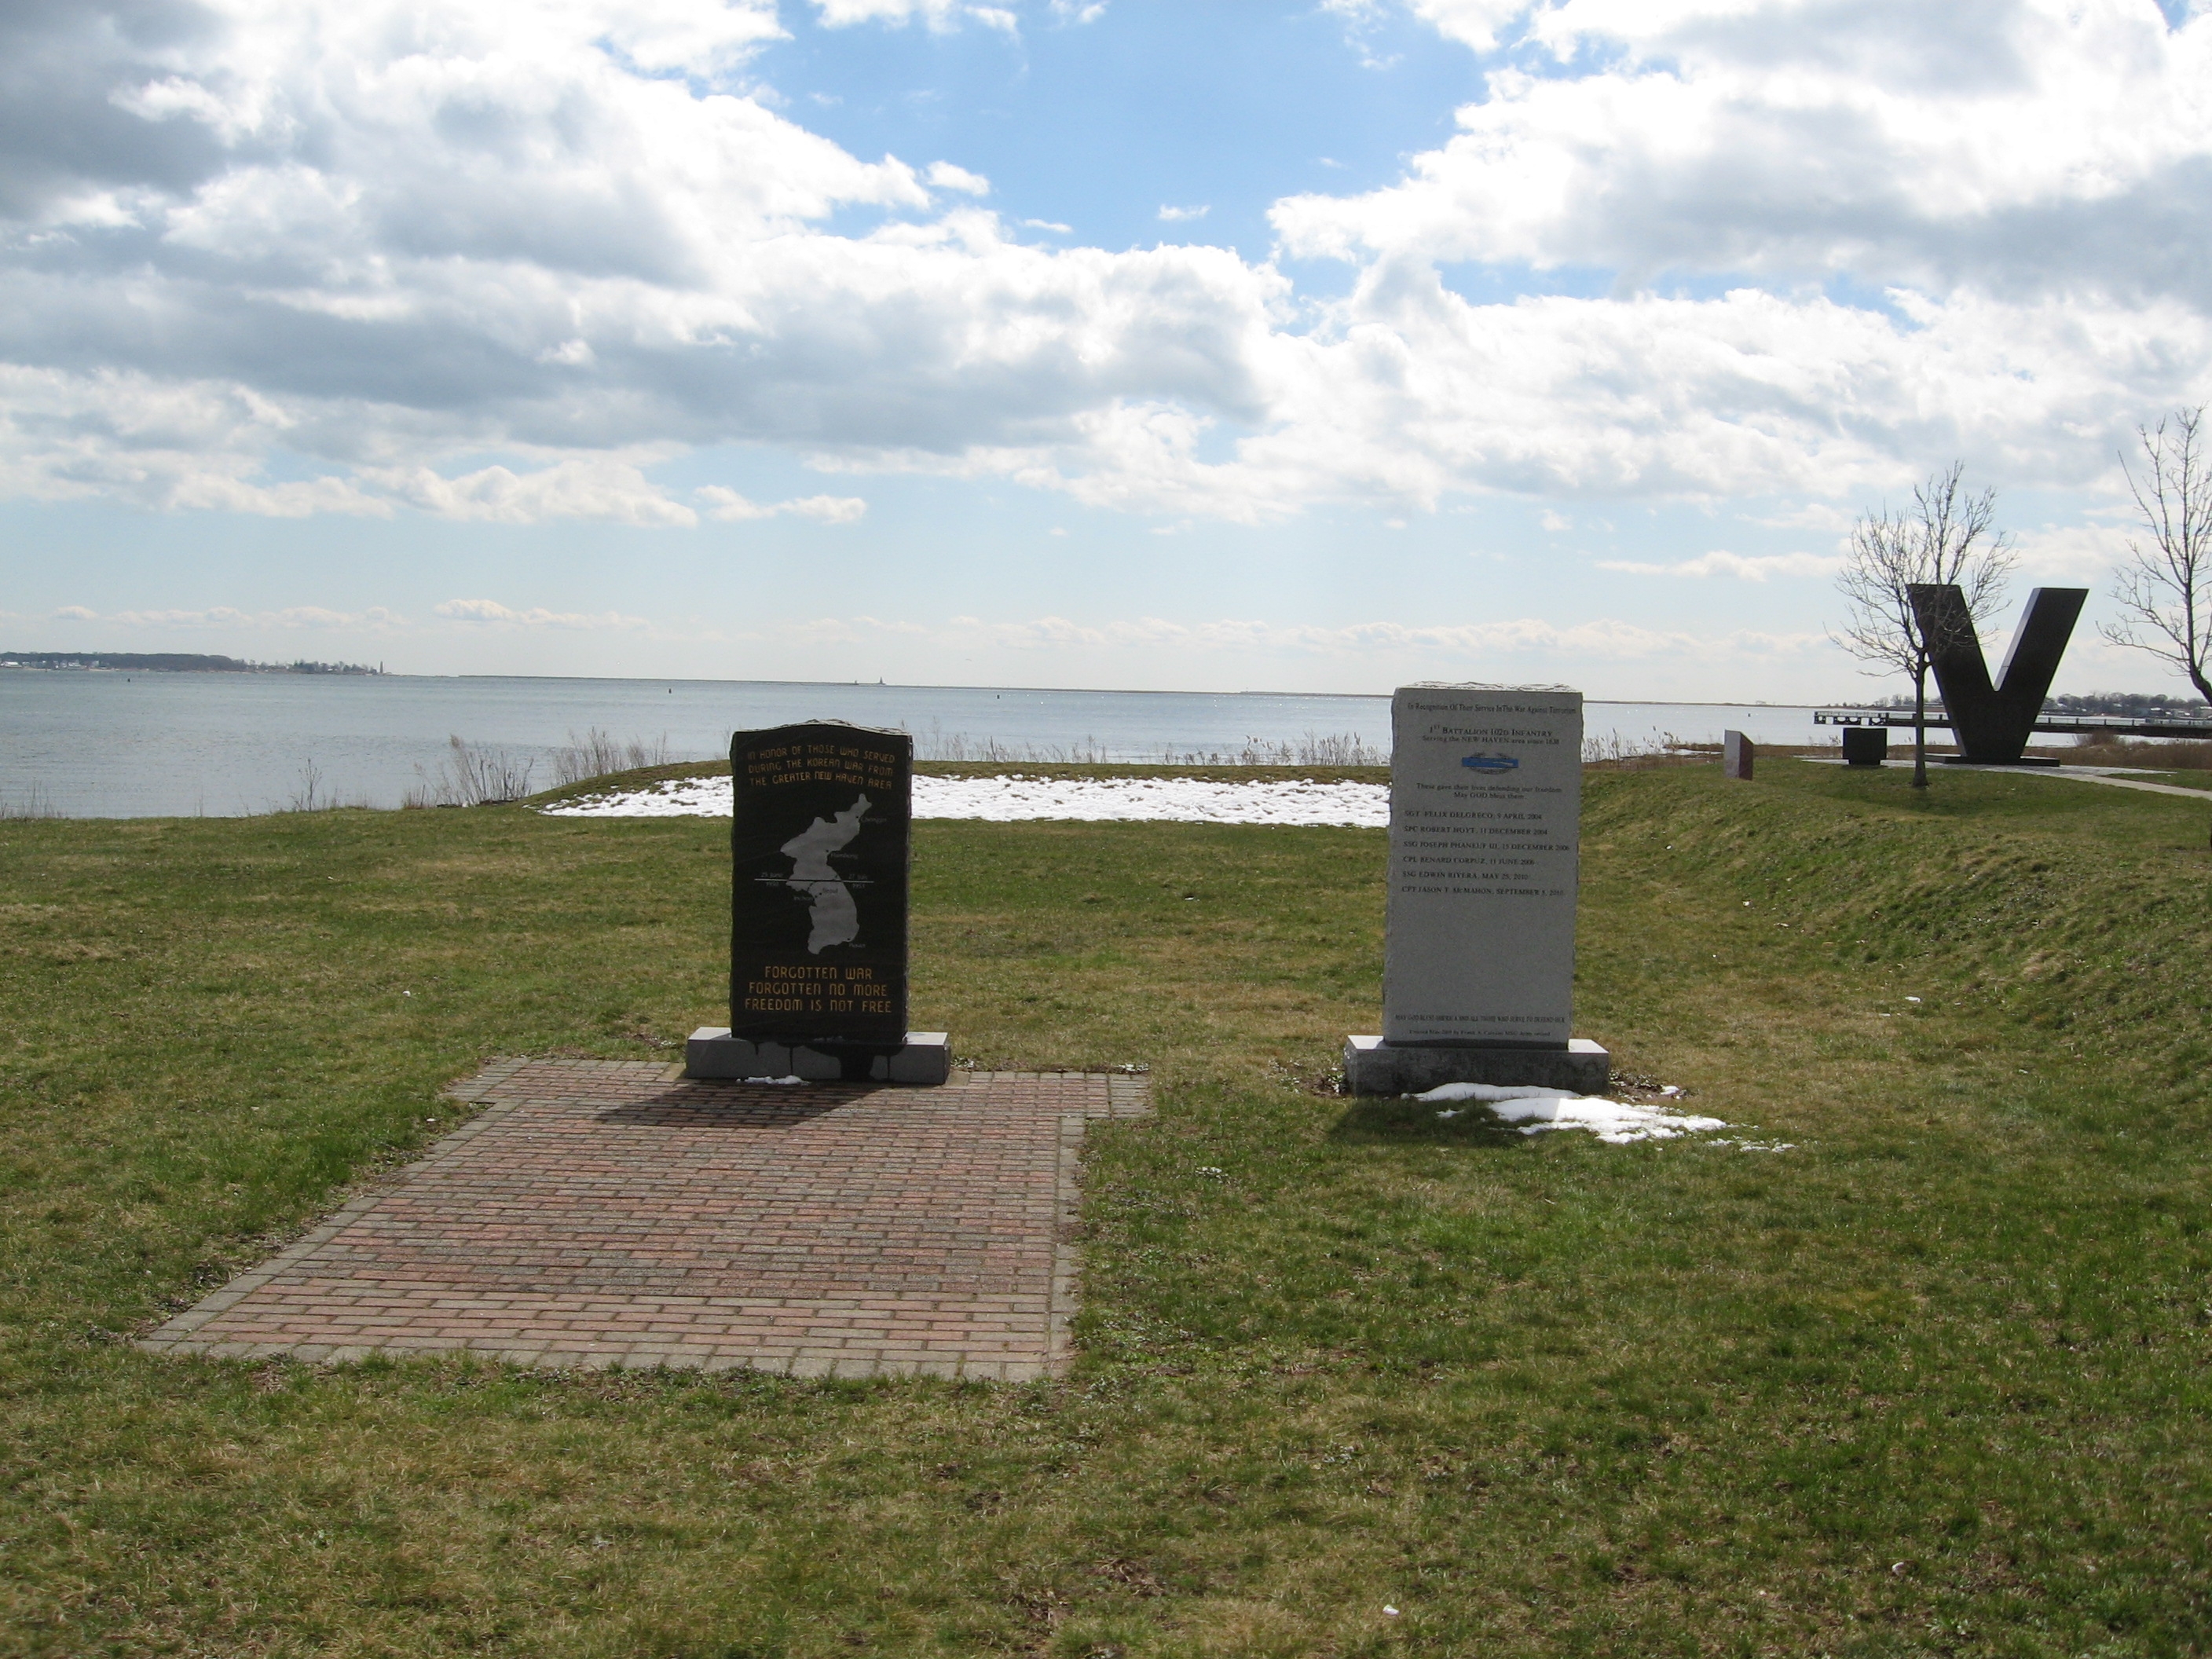 New Haven Area Korean War Monument